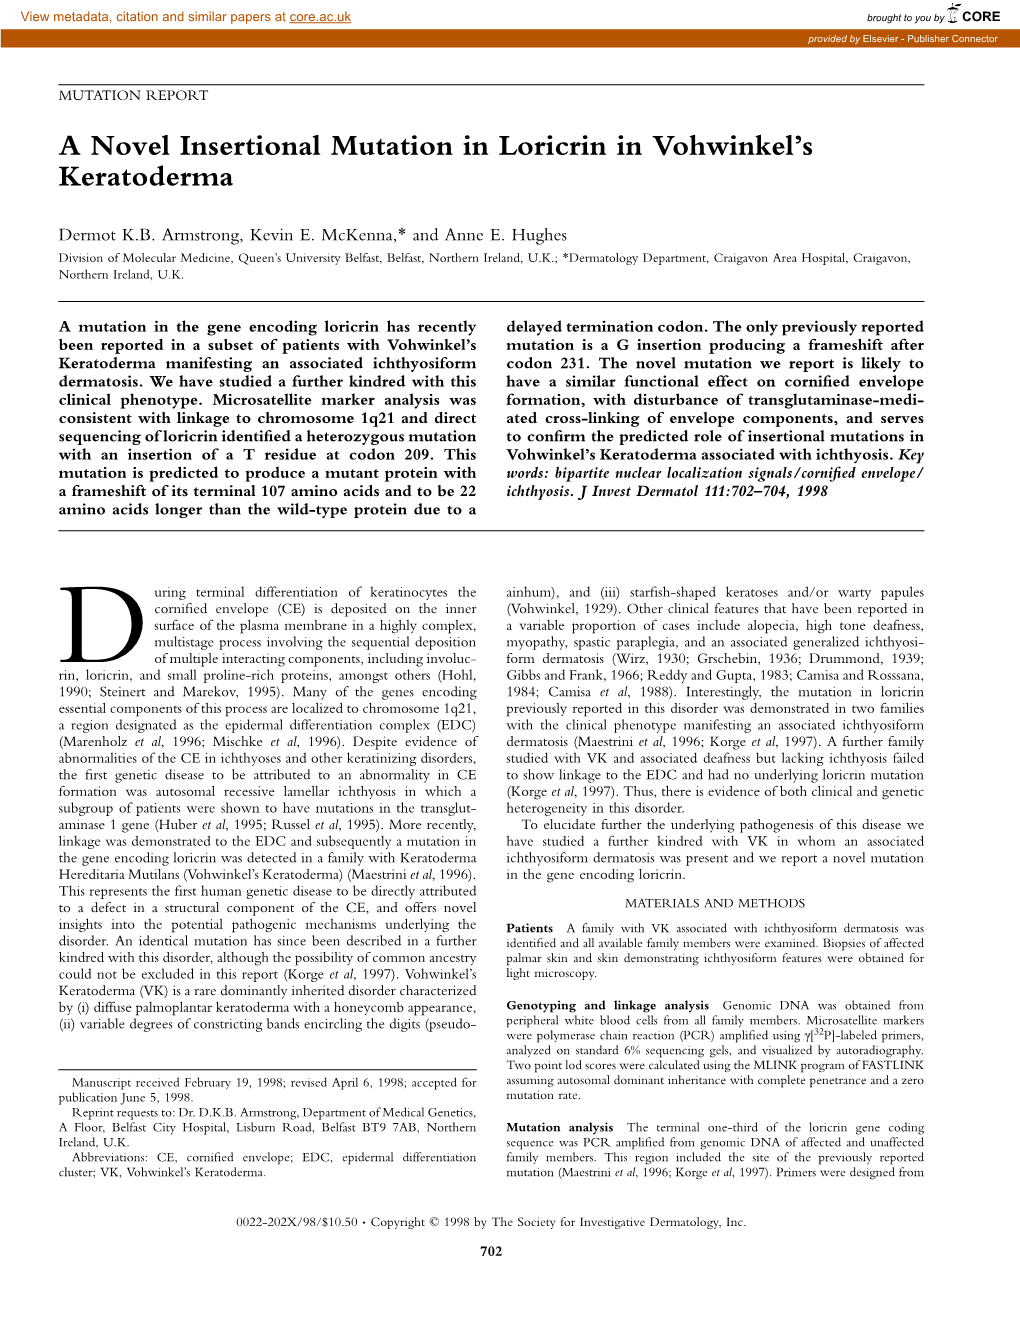 A Novel Insertional Mutation in Loricrin in Vohwinkel's Keratoderma